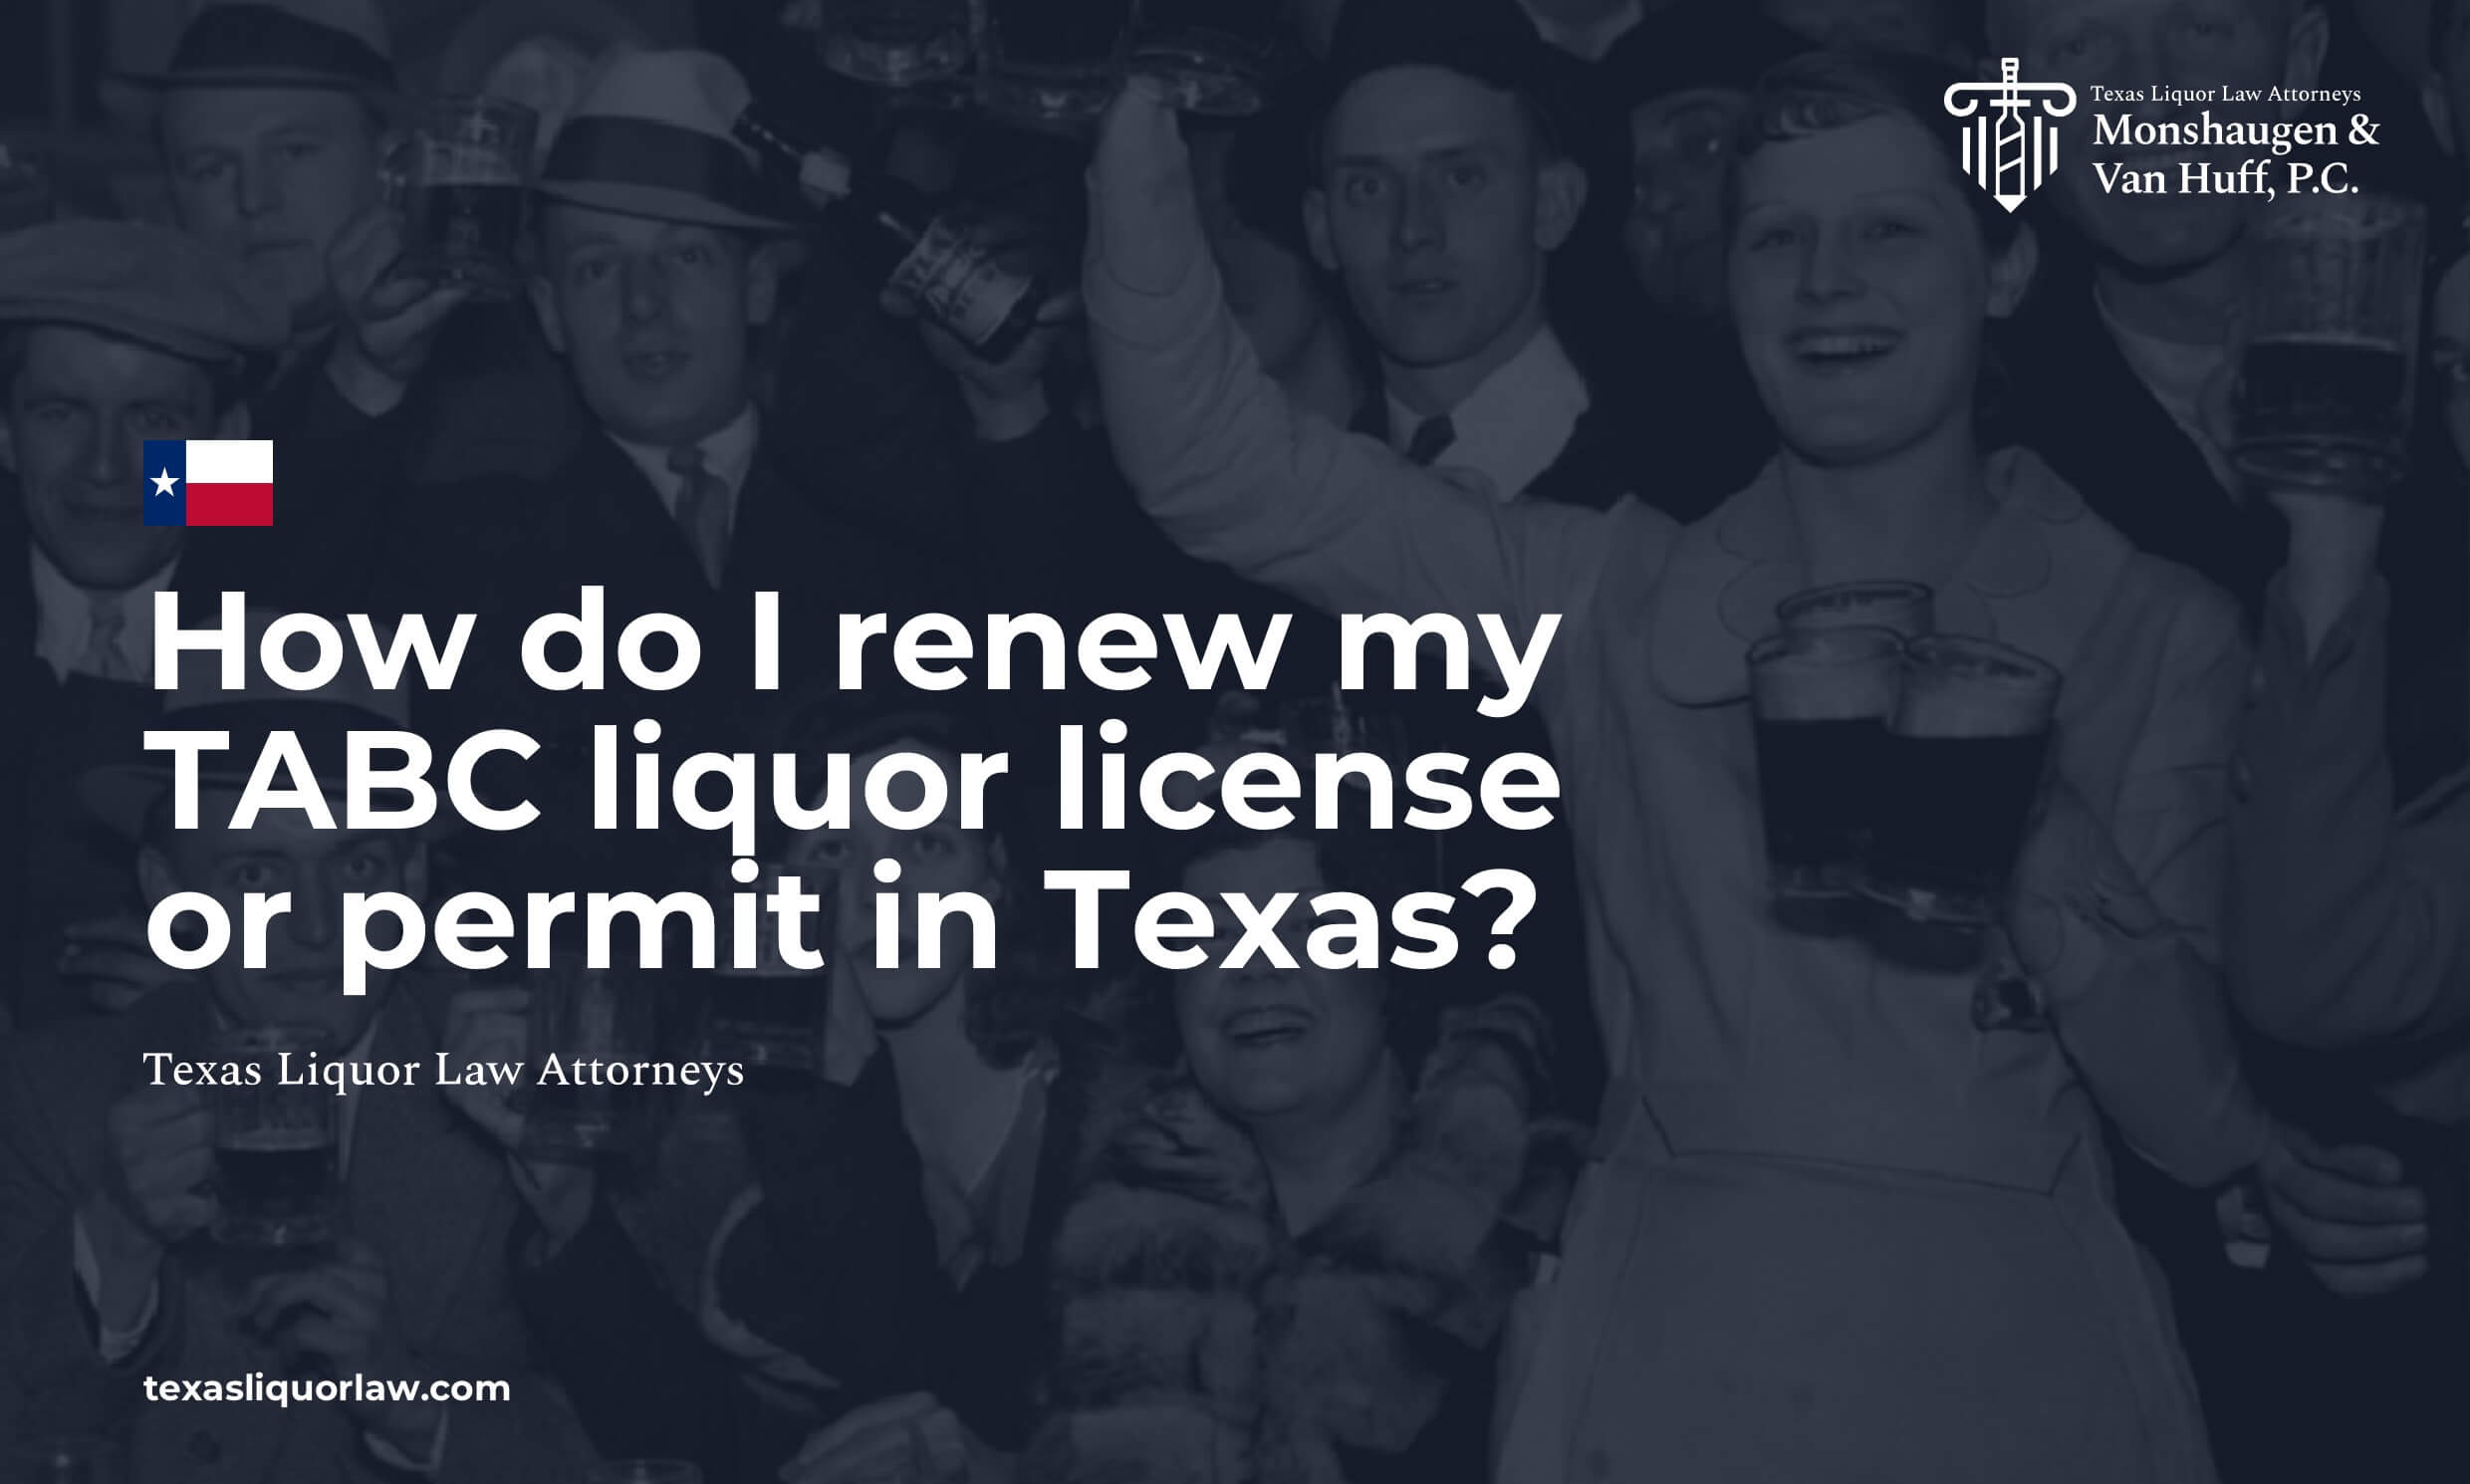 How do I renew my TABC liquor license or permit in Texas?